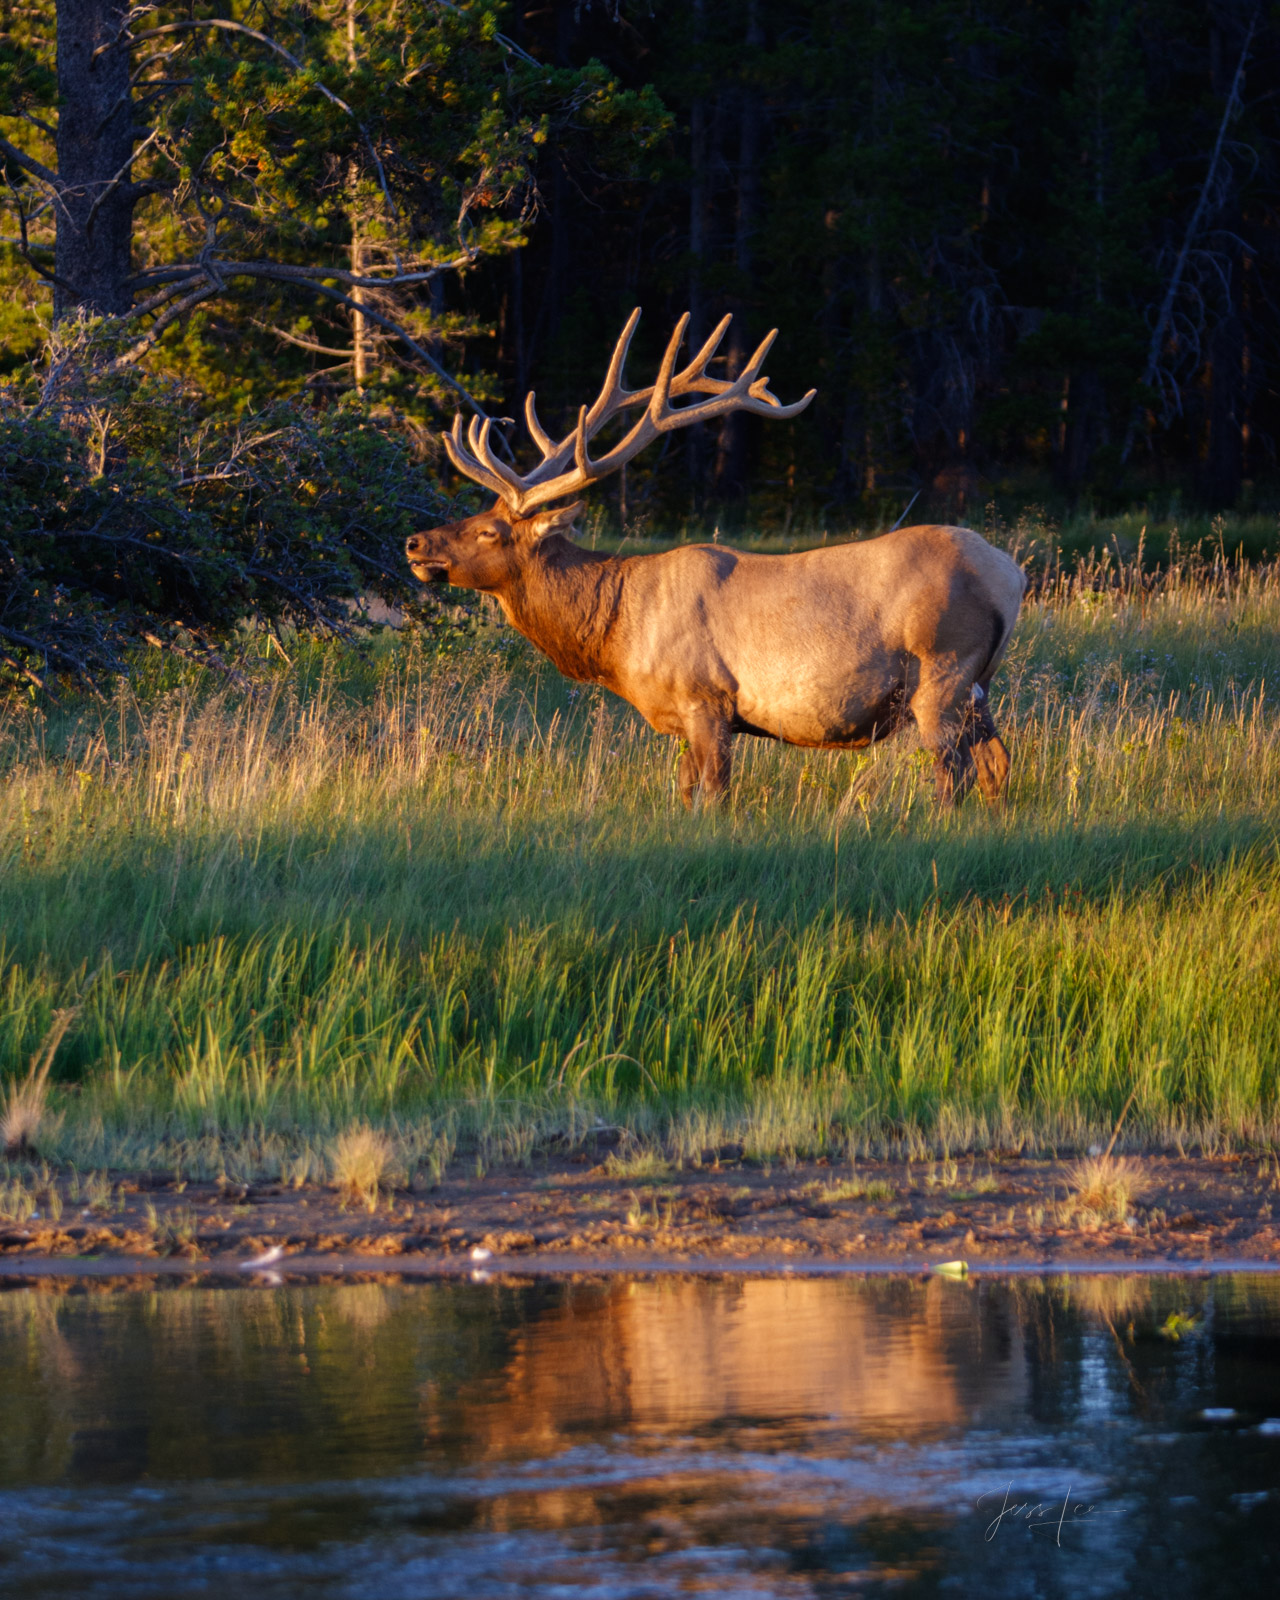 Bull elk reflecting in the pond in the morning light